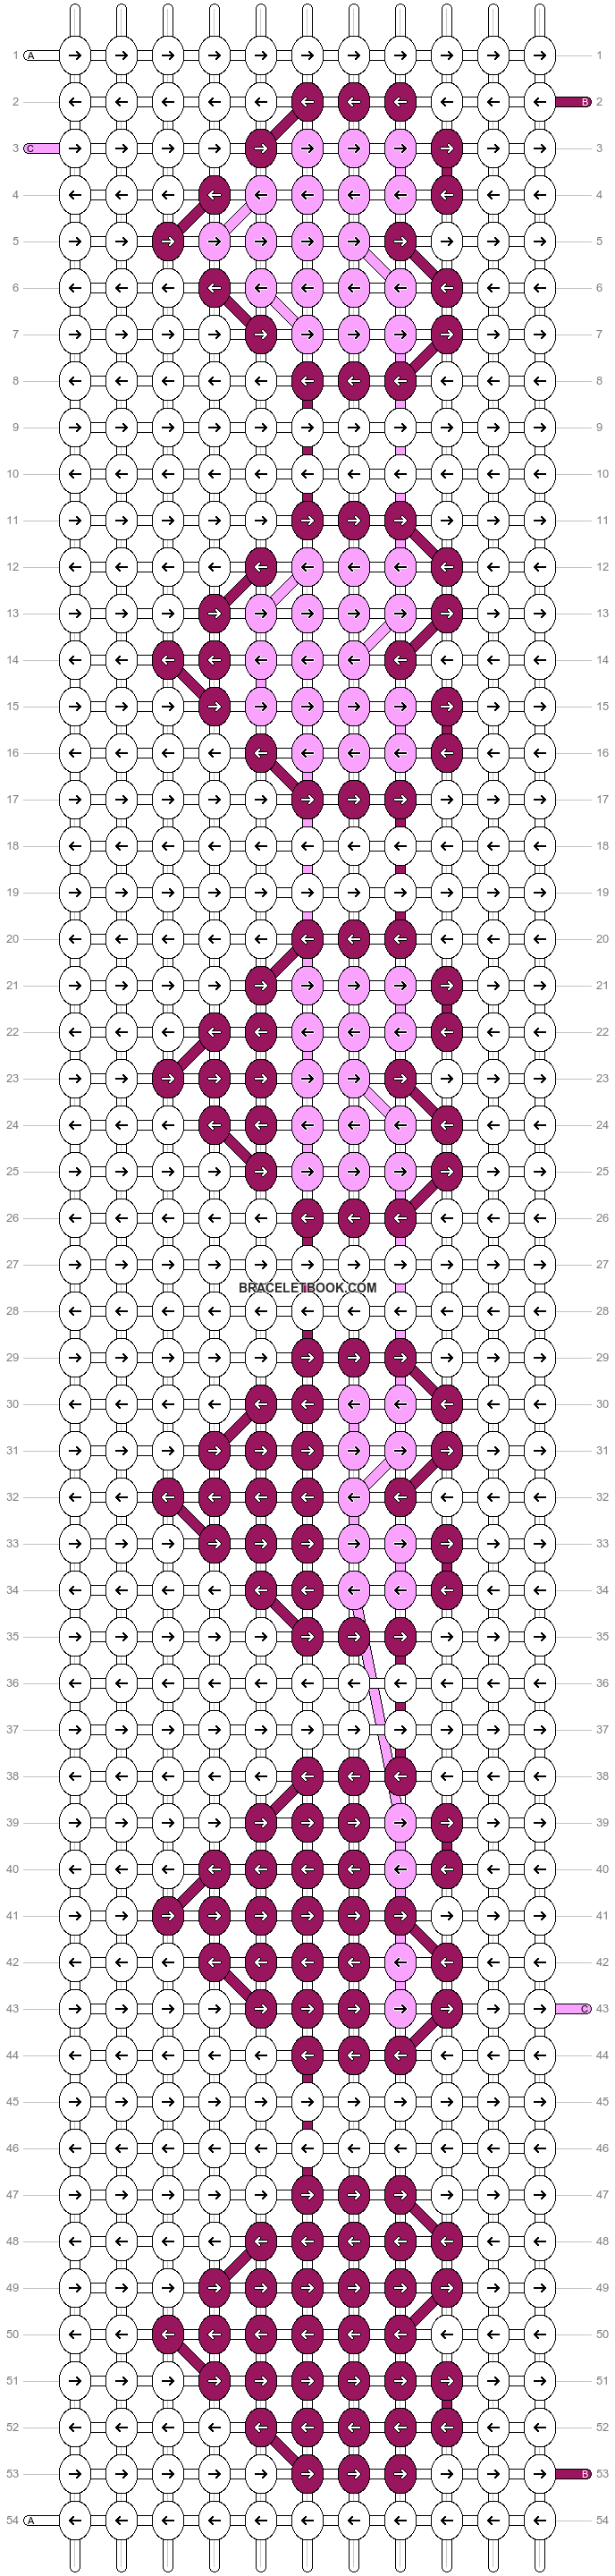 Alpha pattern #90505 variation #164354 pattern